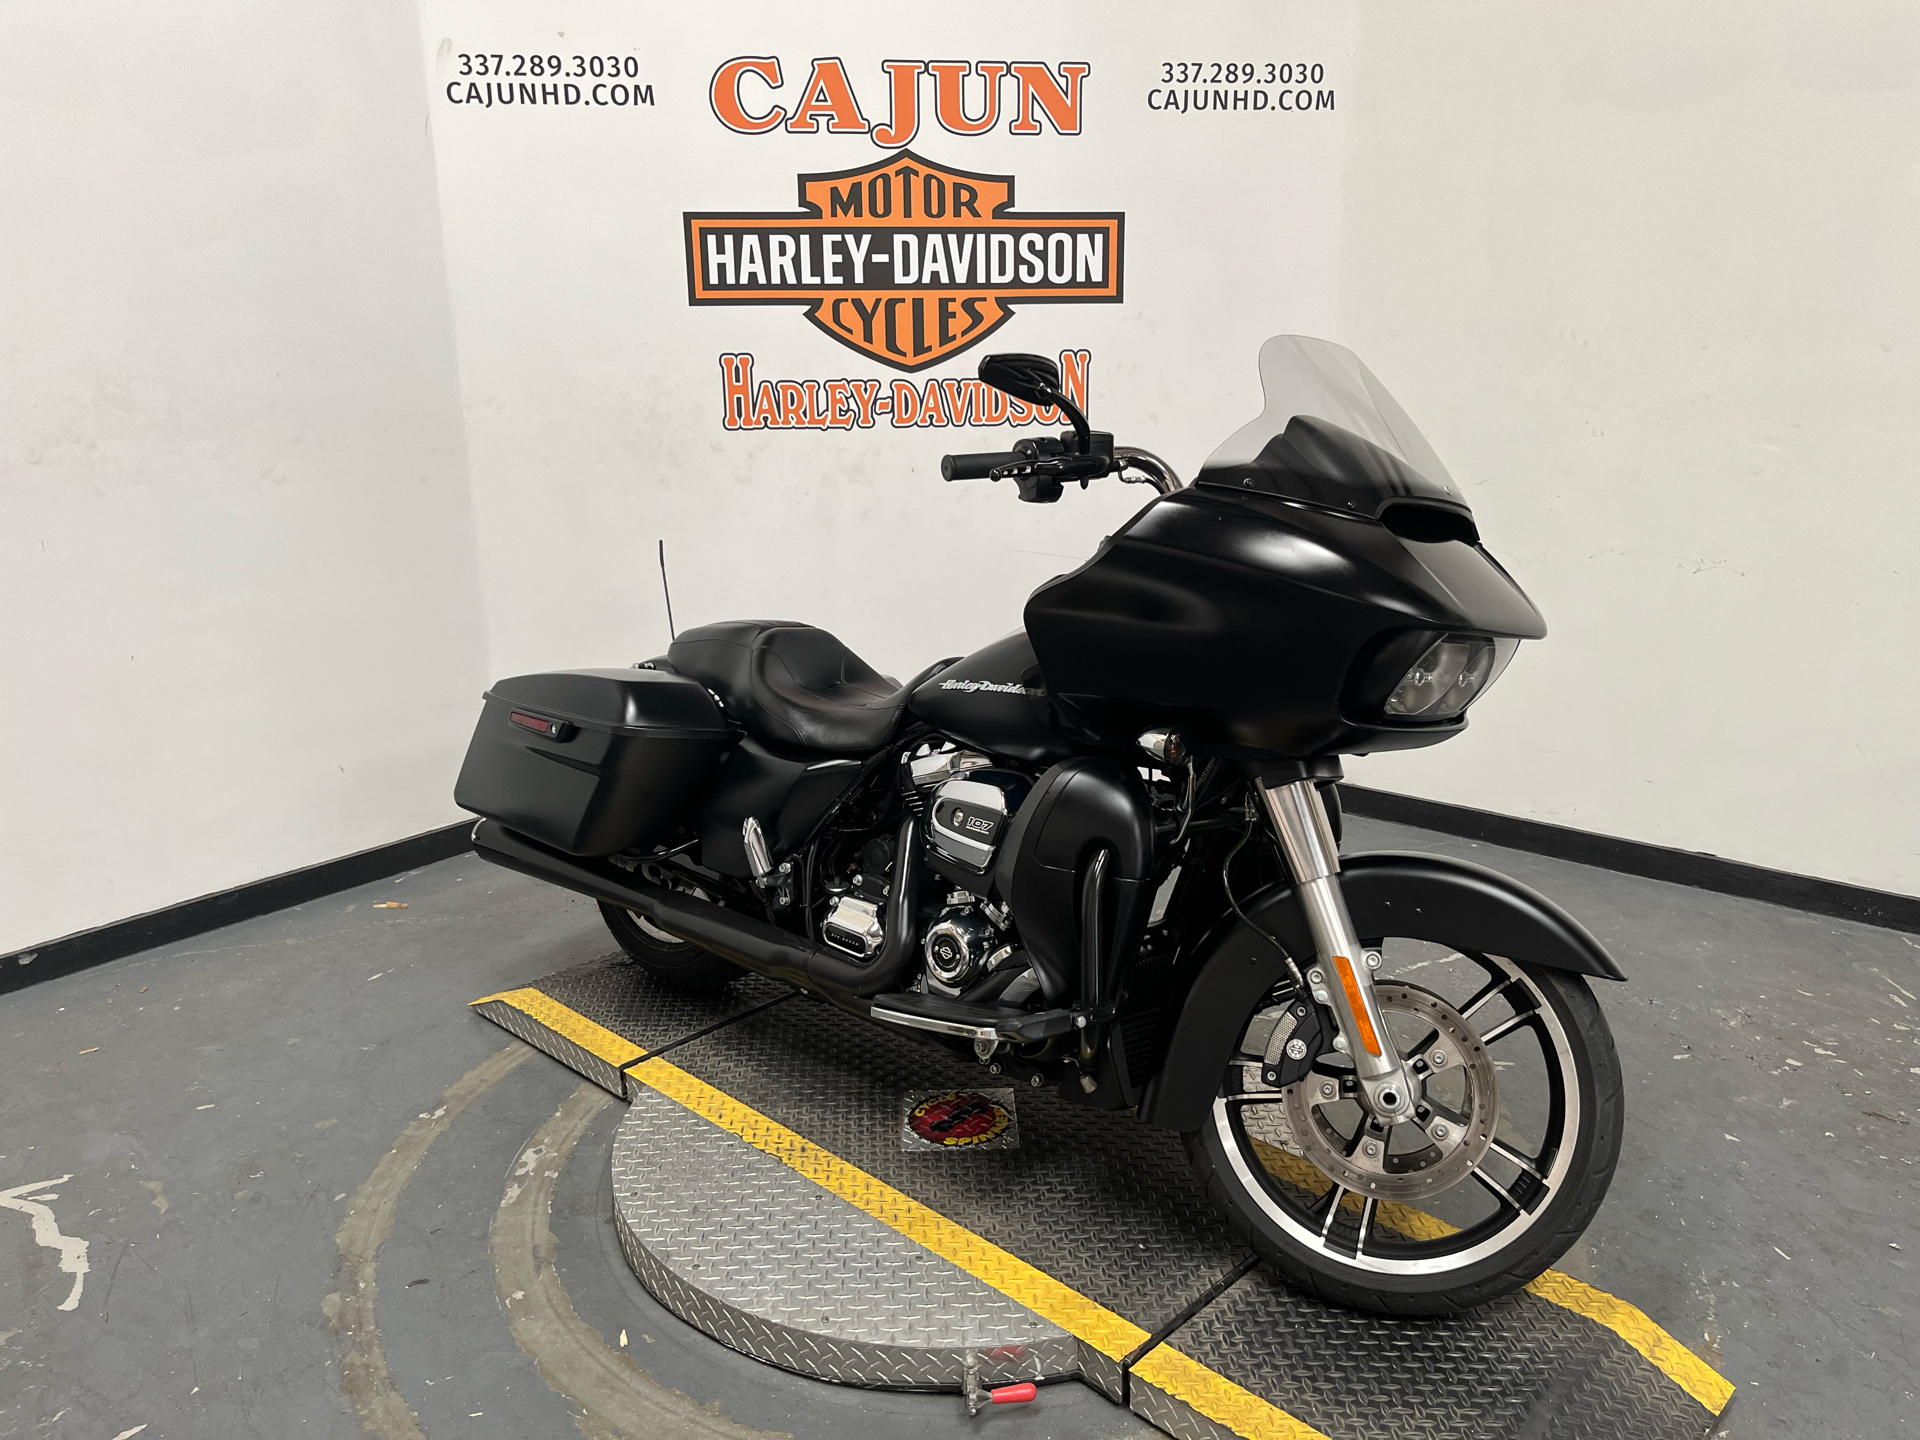 2017 Harley-Davidson Road Glide® Special in Scott, Louisiana - Photo 4